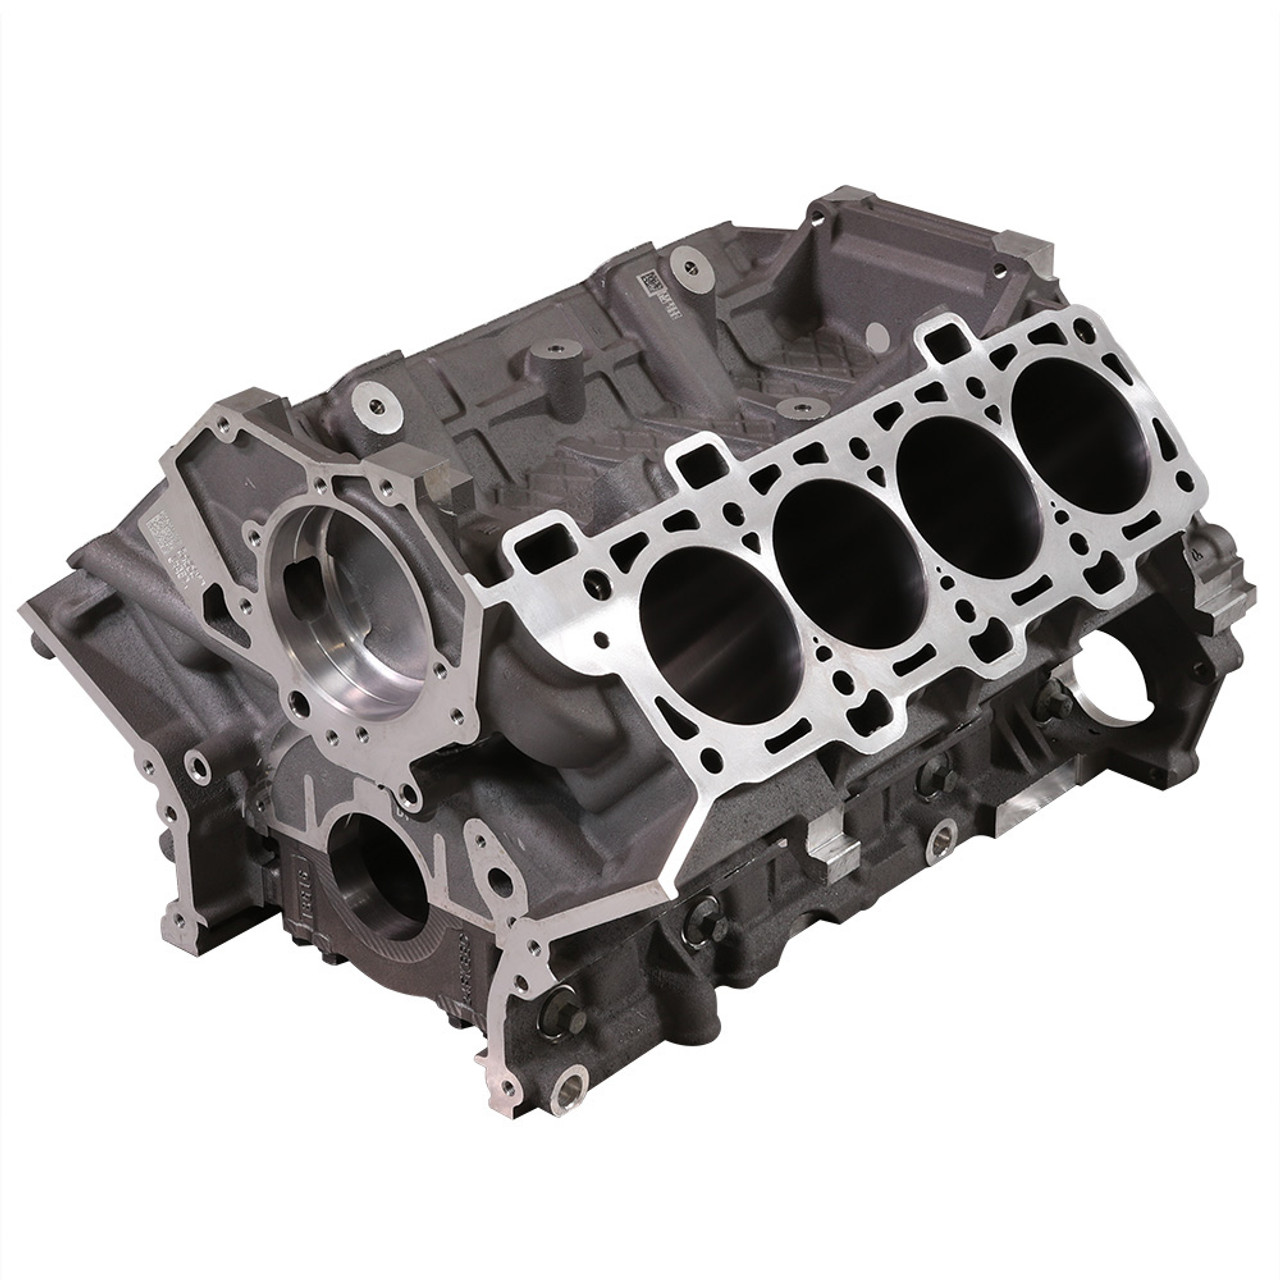 5.2L "Gen 3" Coyote Aluminum Engine Block